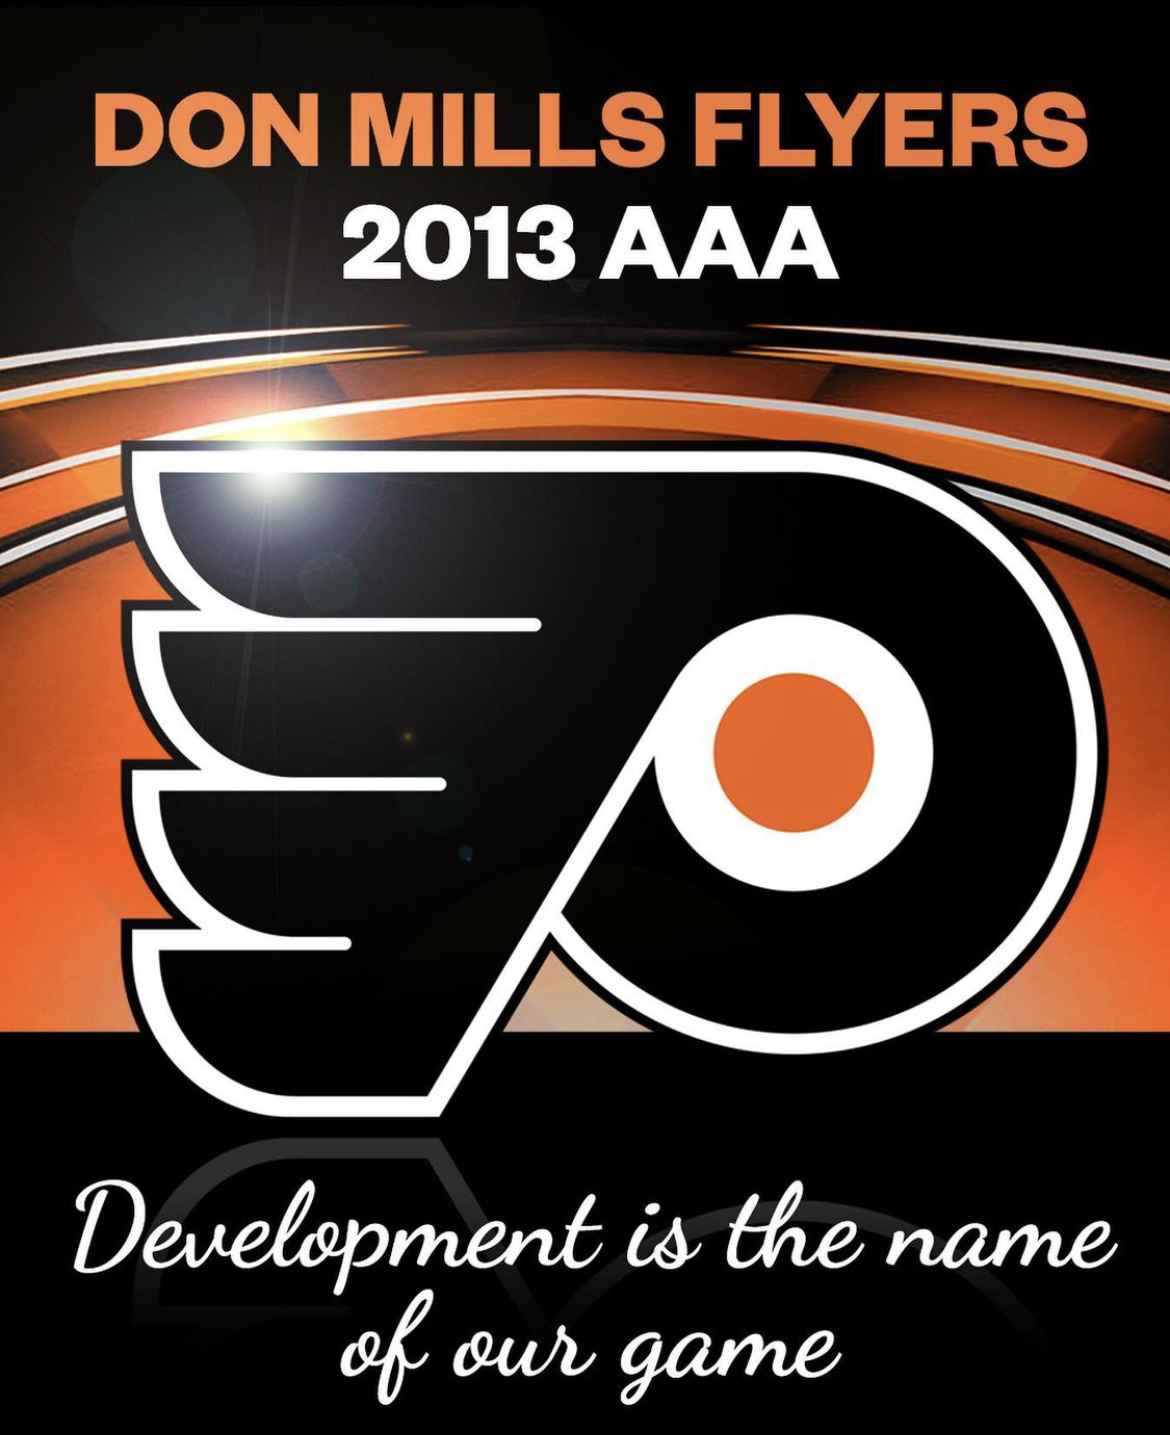 Don Mills Flyers 2013 AAA